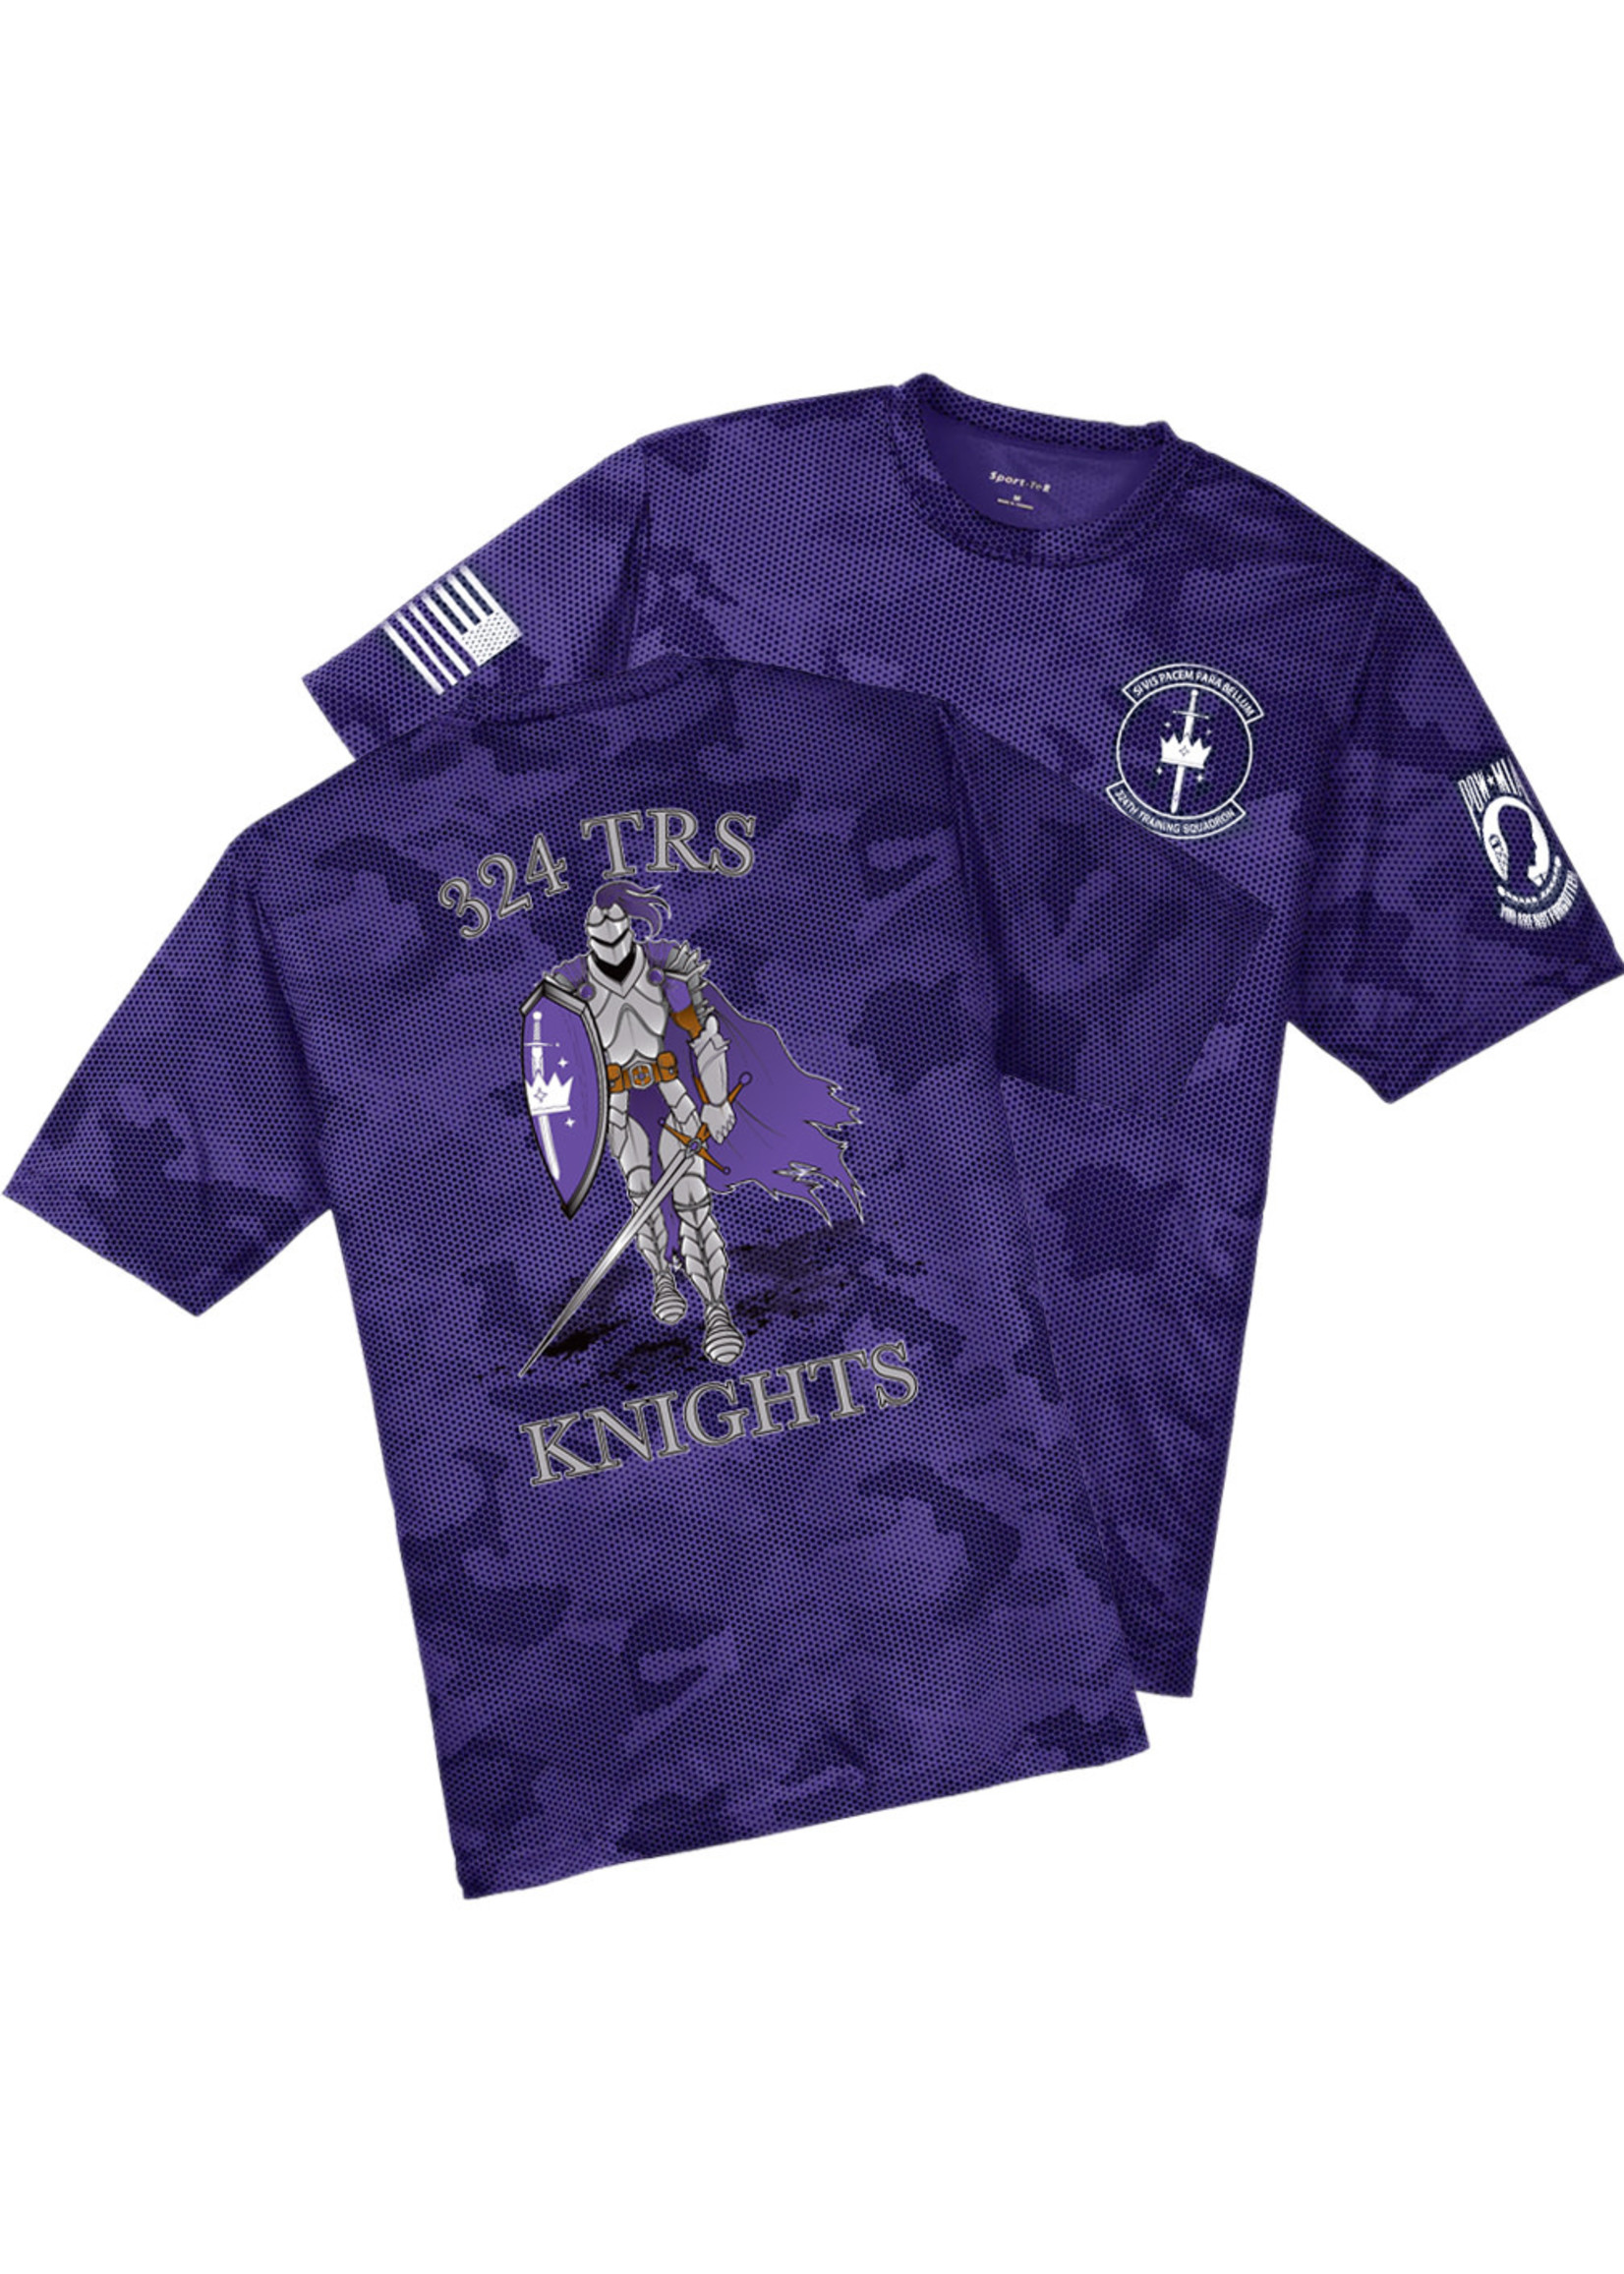 324th Knights Digi Wicking Shirt